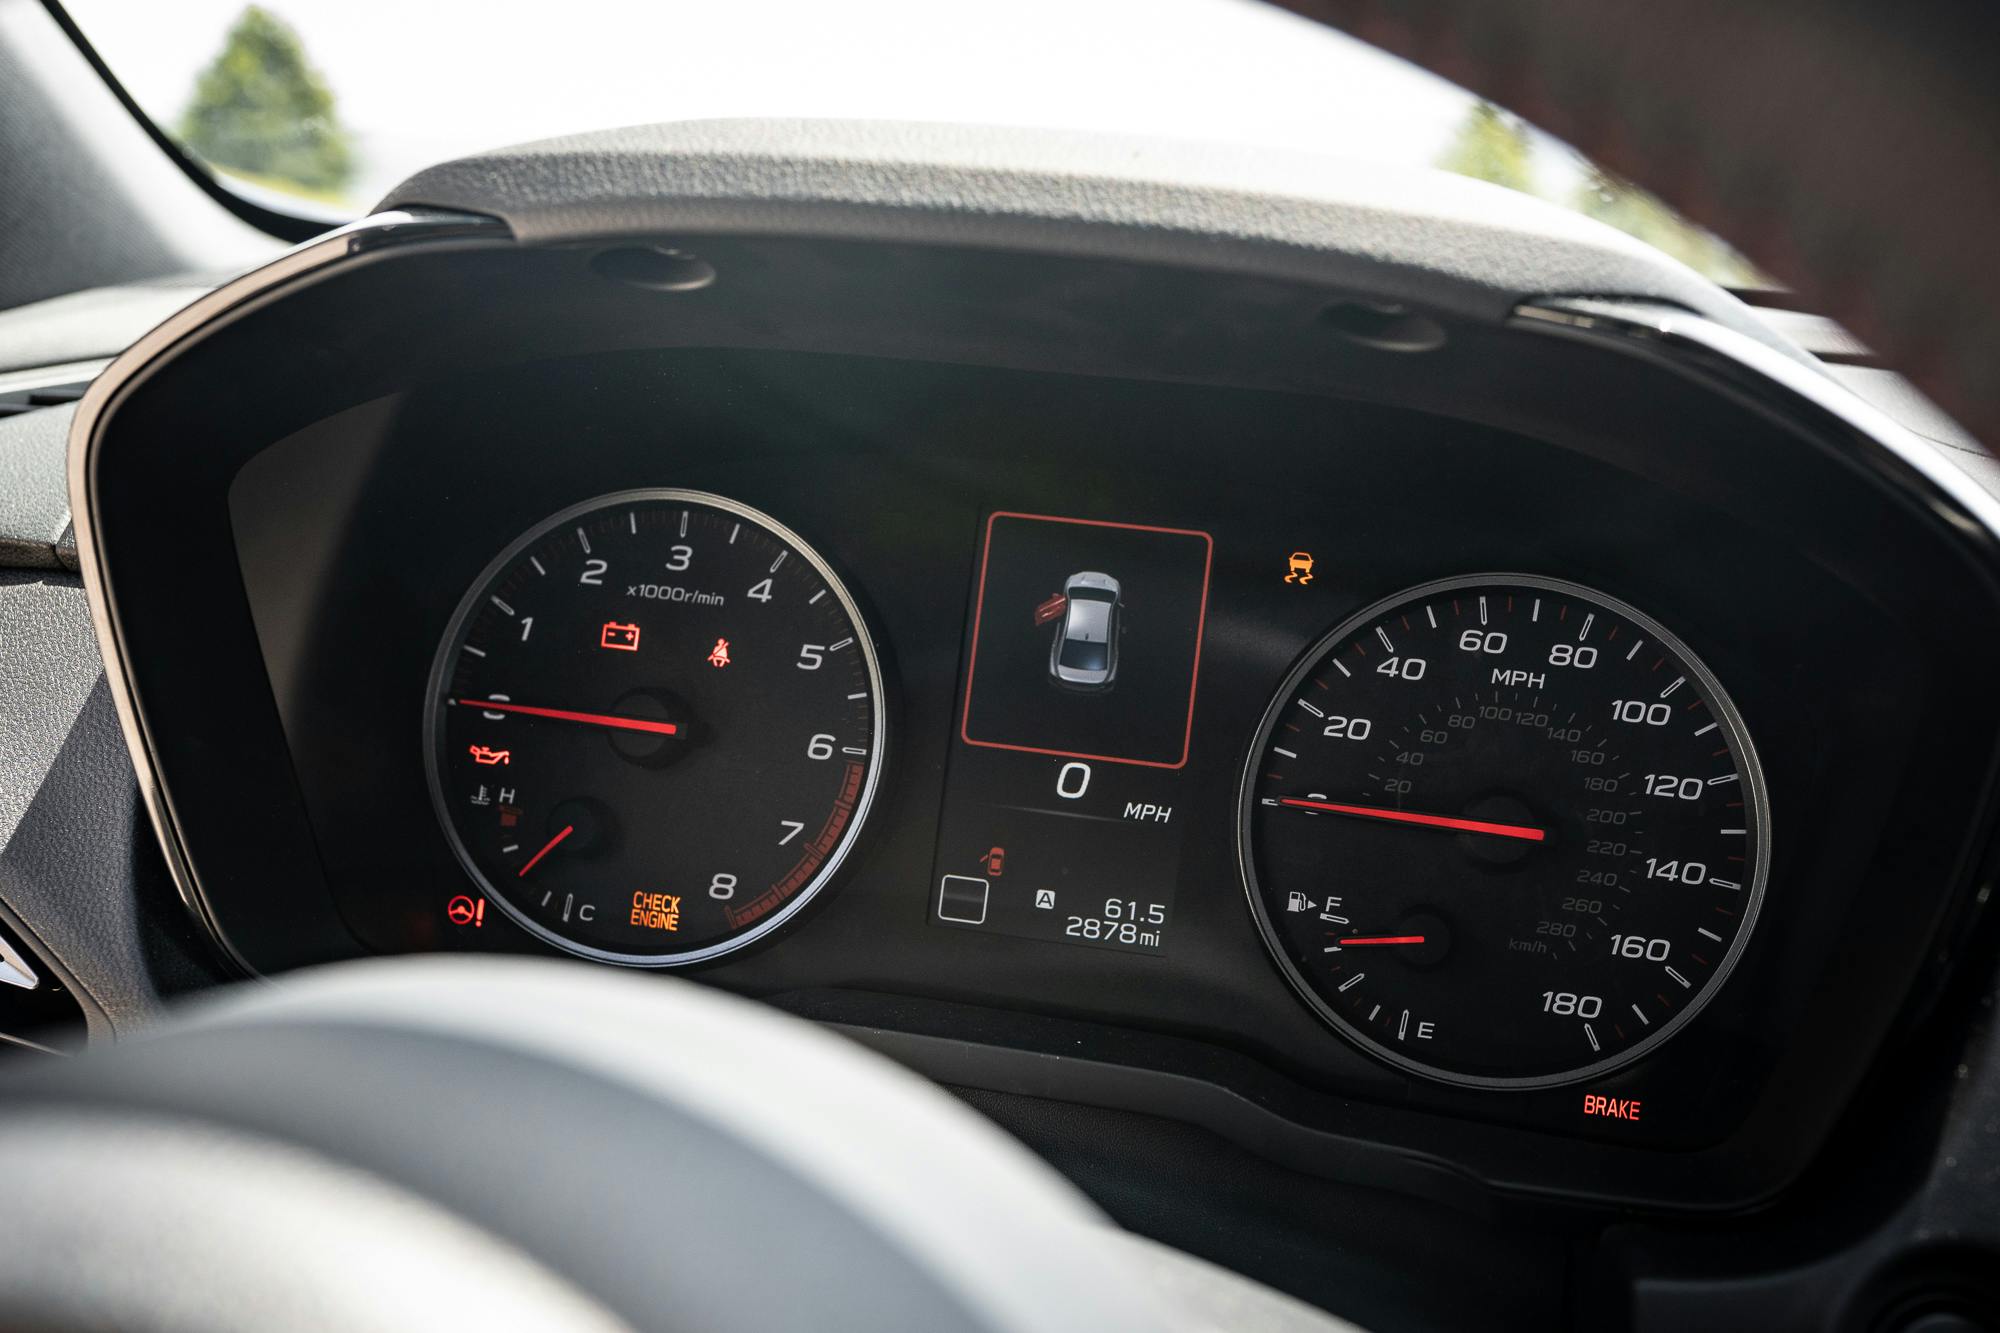 2022 Subaru WRX 6-Speed interior dash